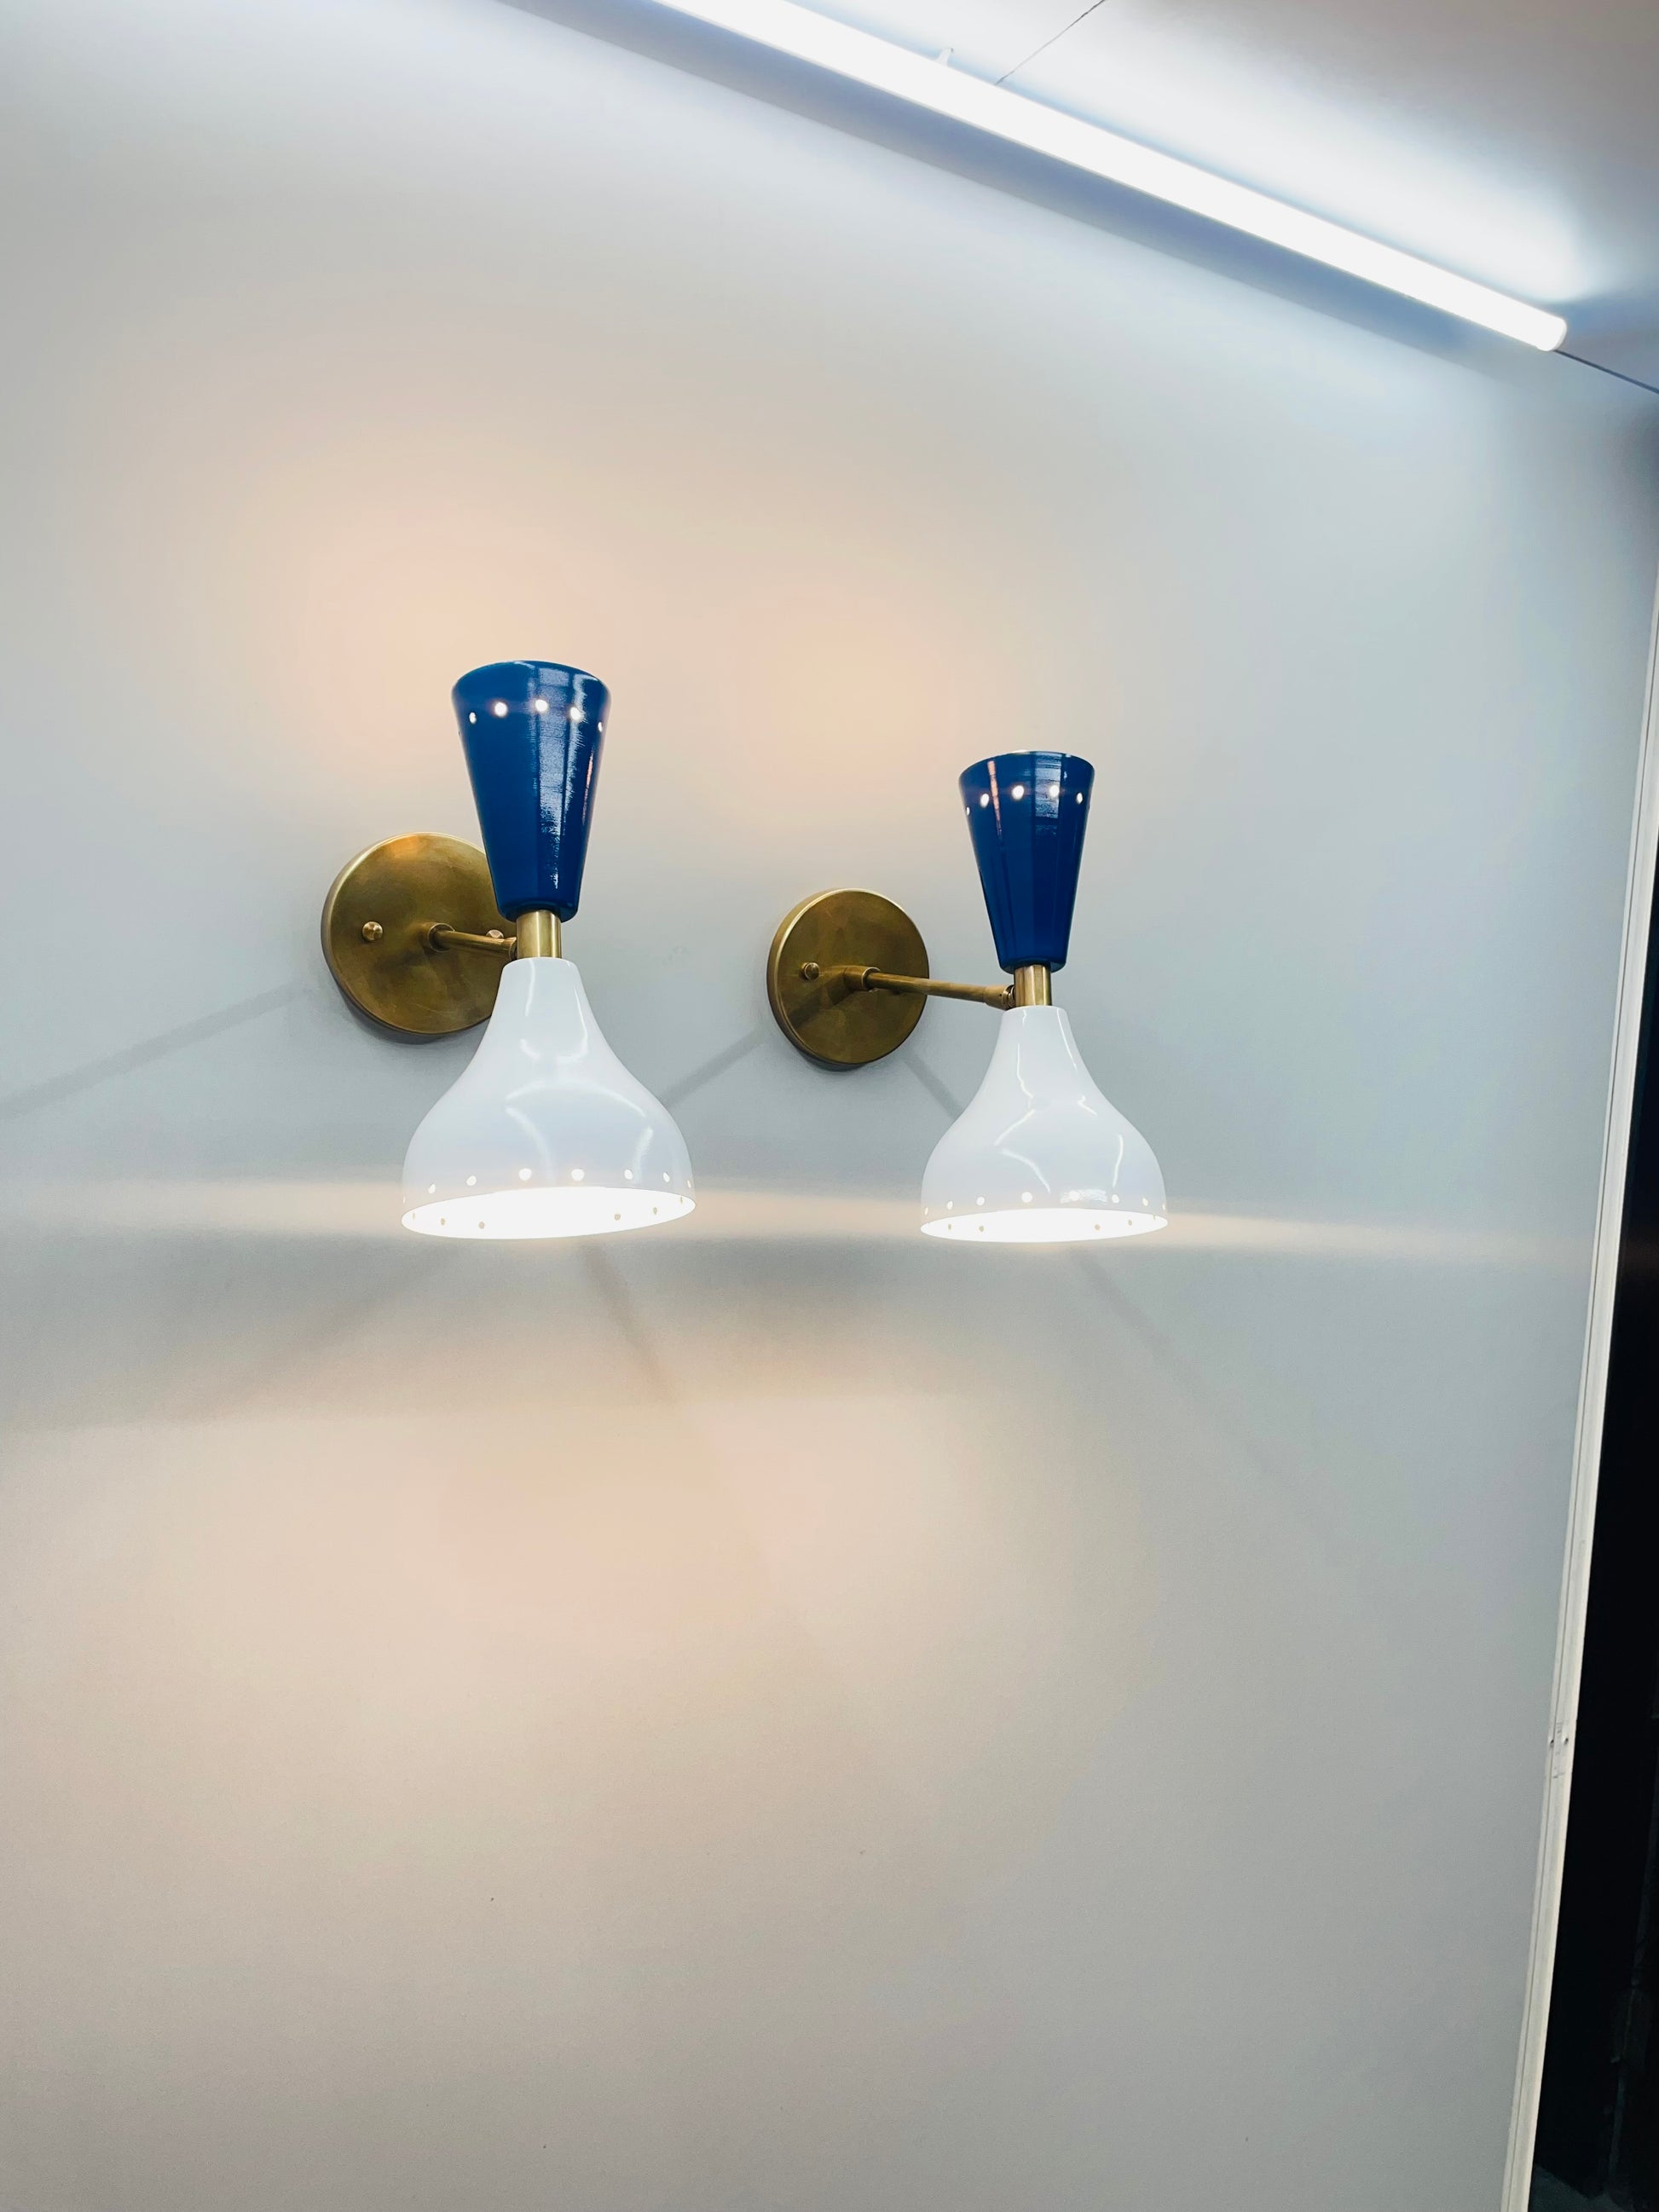 Diabolo Wall Sconce Italian Modern Stilnovo Style Set of Two Wall Light lamps - Global Lights Hub